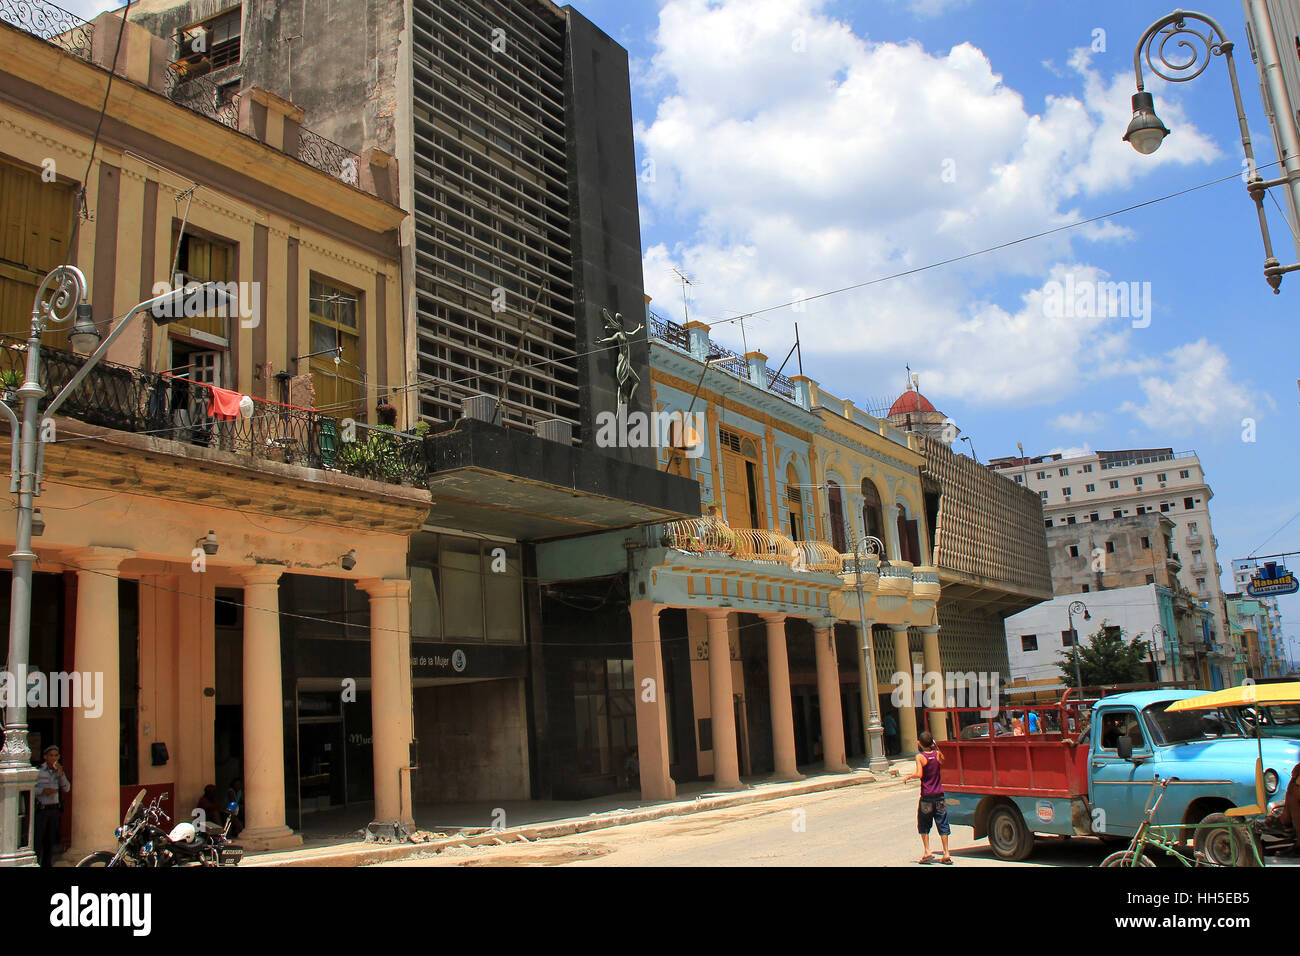 Imágenes de La Habana, Cuba. La arquitectura de La Habana. Coches Antiguos en La Habana, Cuba. Foto de stock